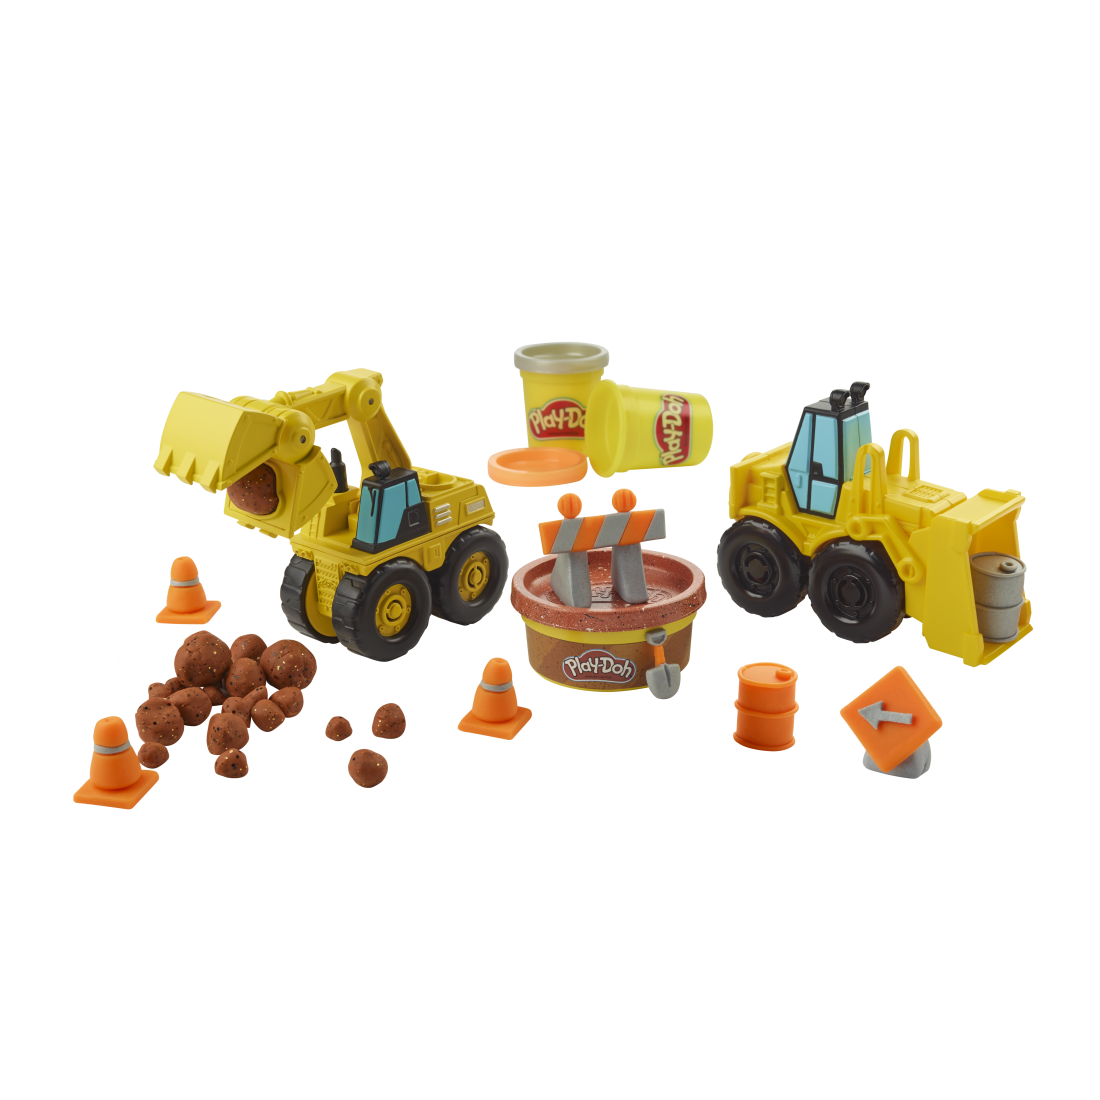 Set Play-Doh Wheels - Excavator